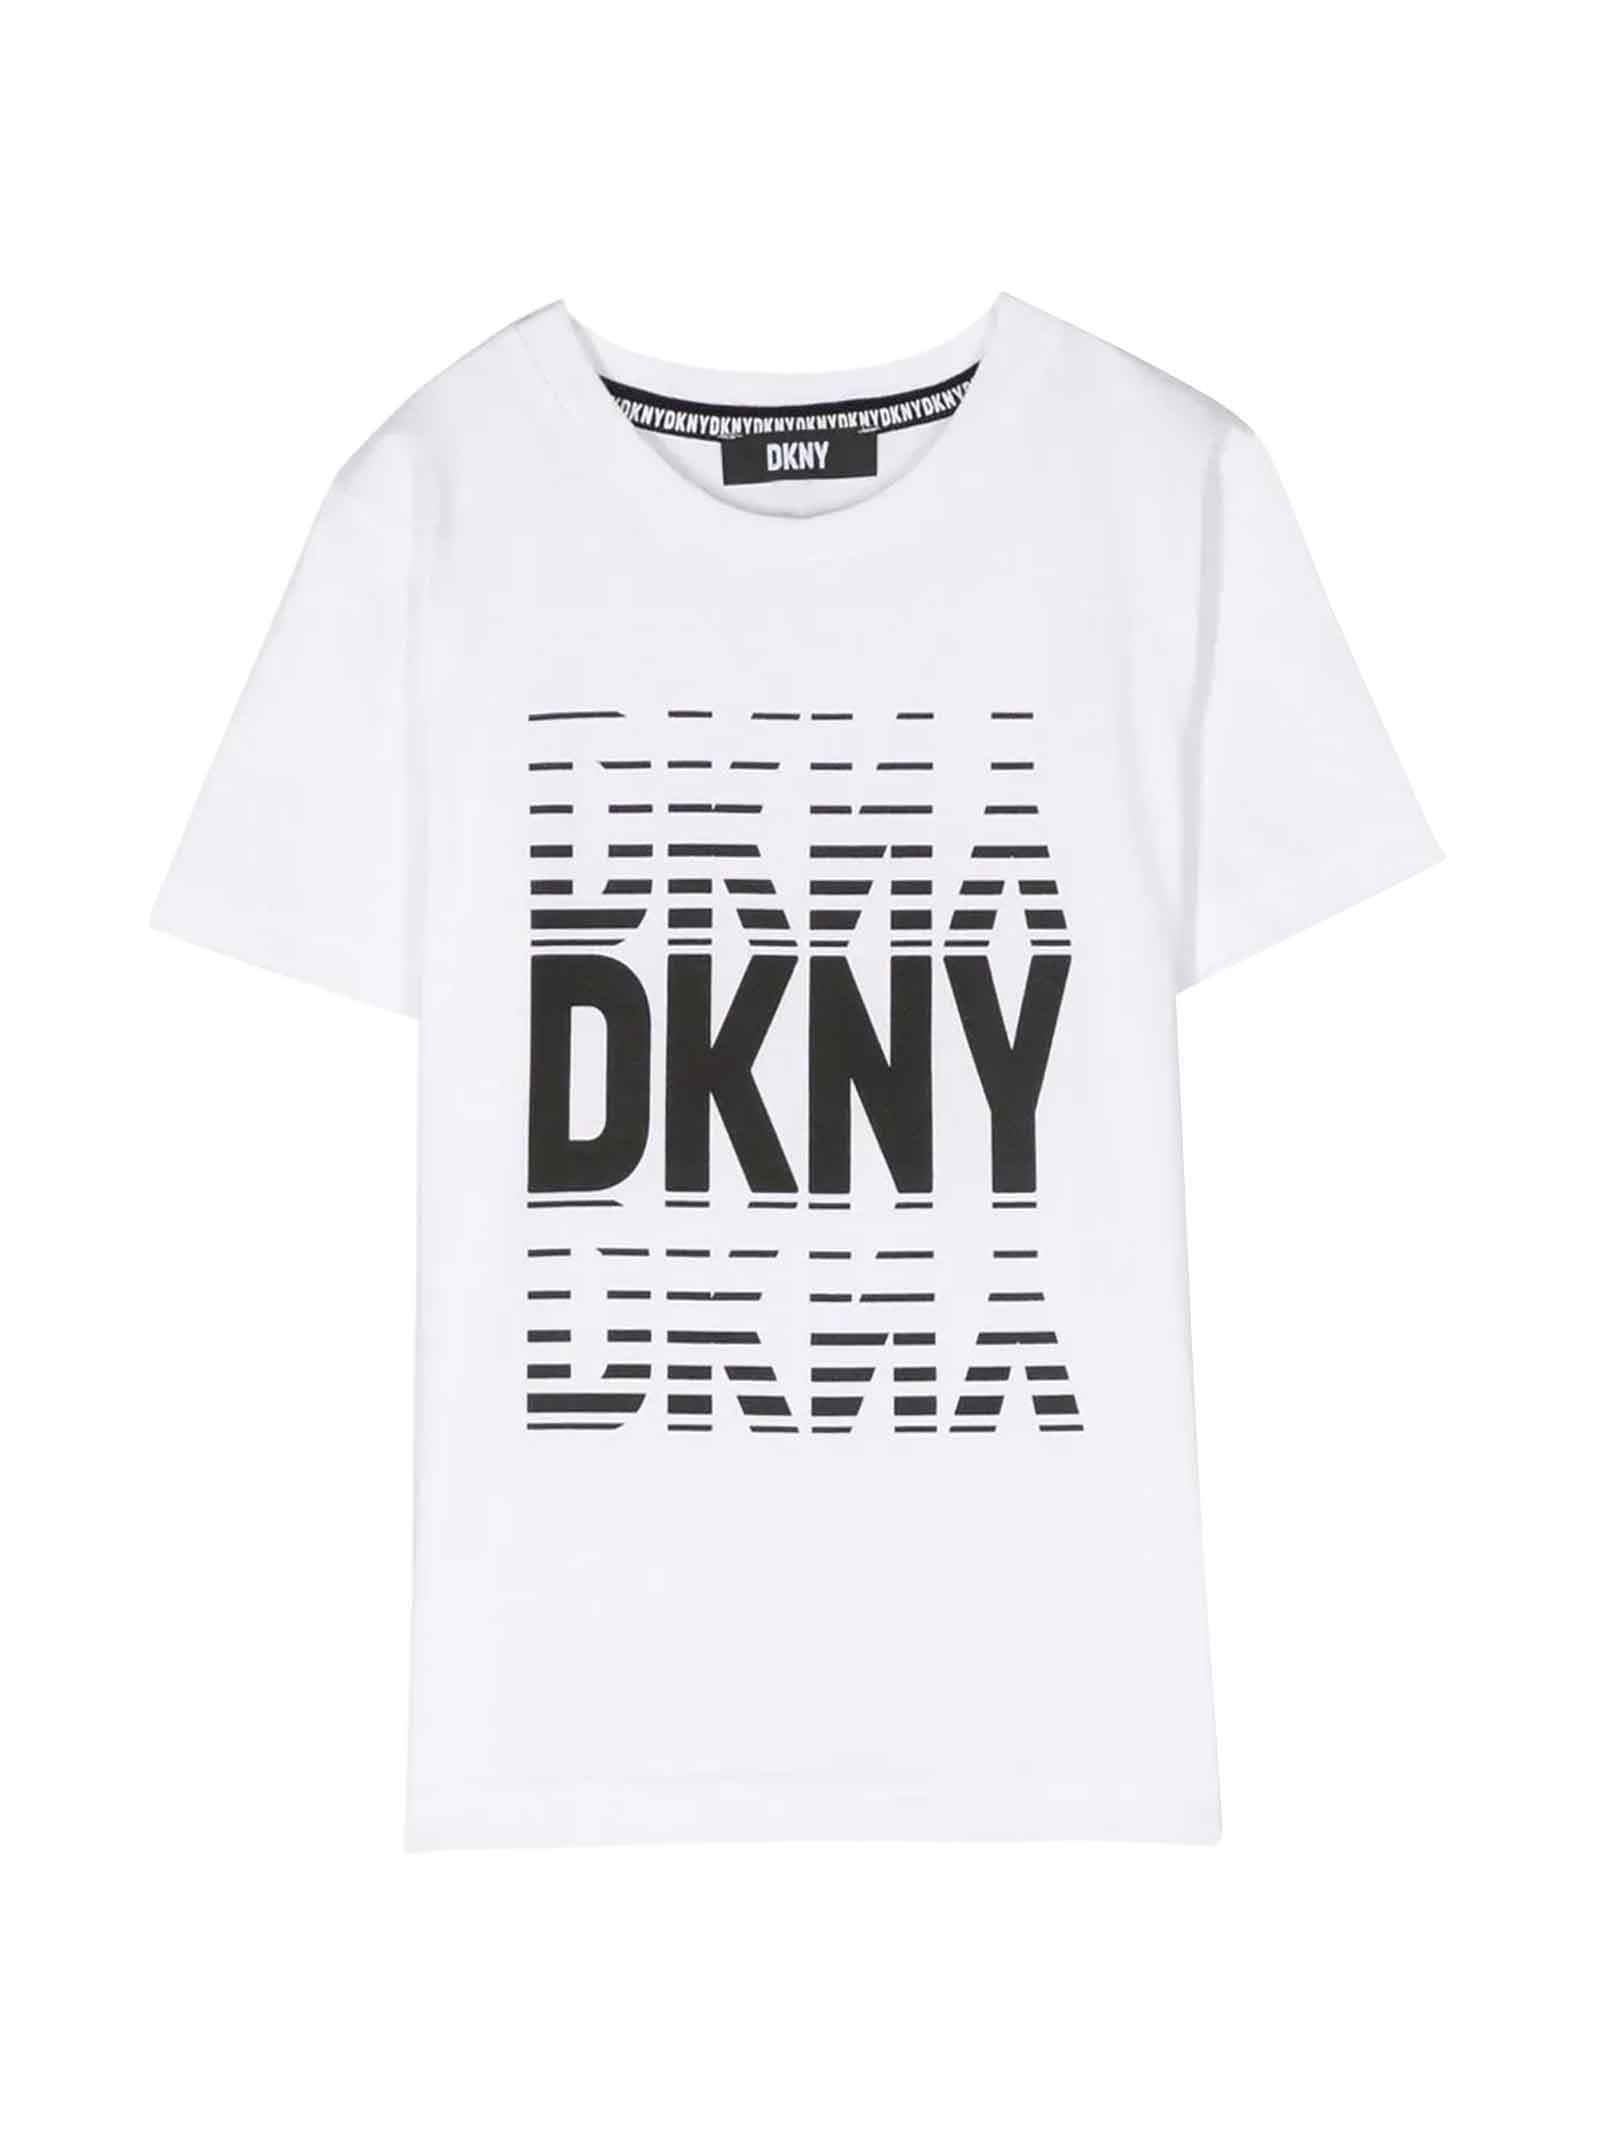 DKNY White T-shirt Boy